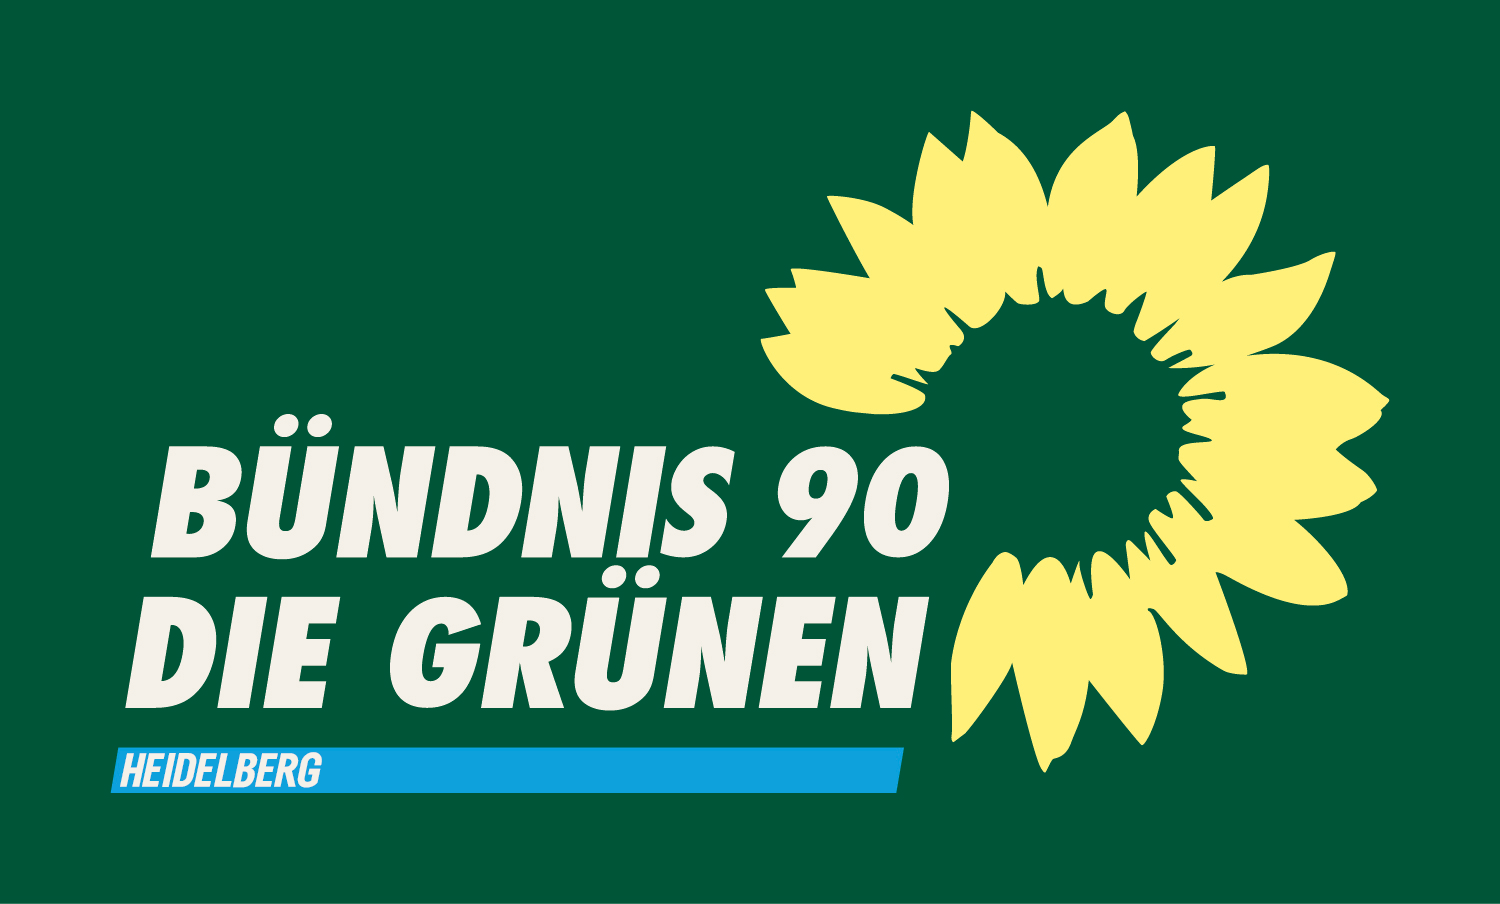 (c) Gruene-heidelberg.de